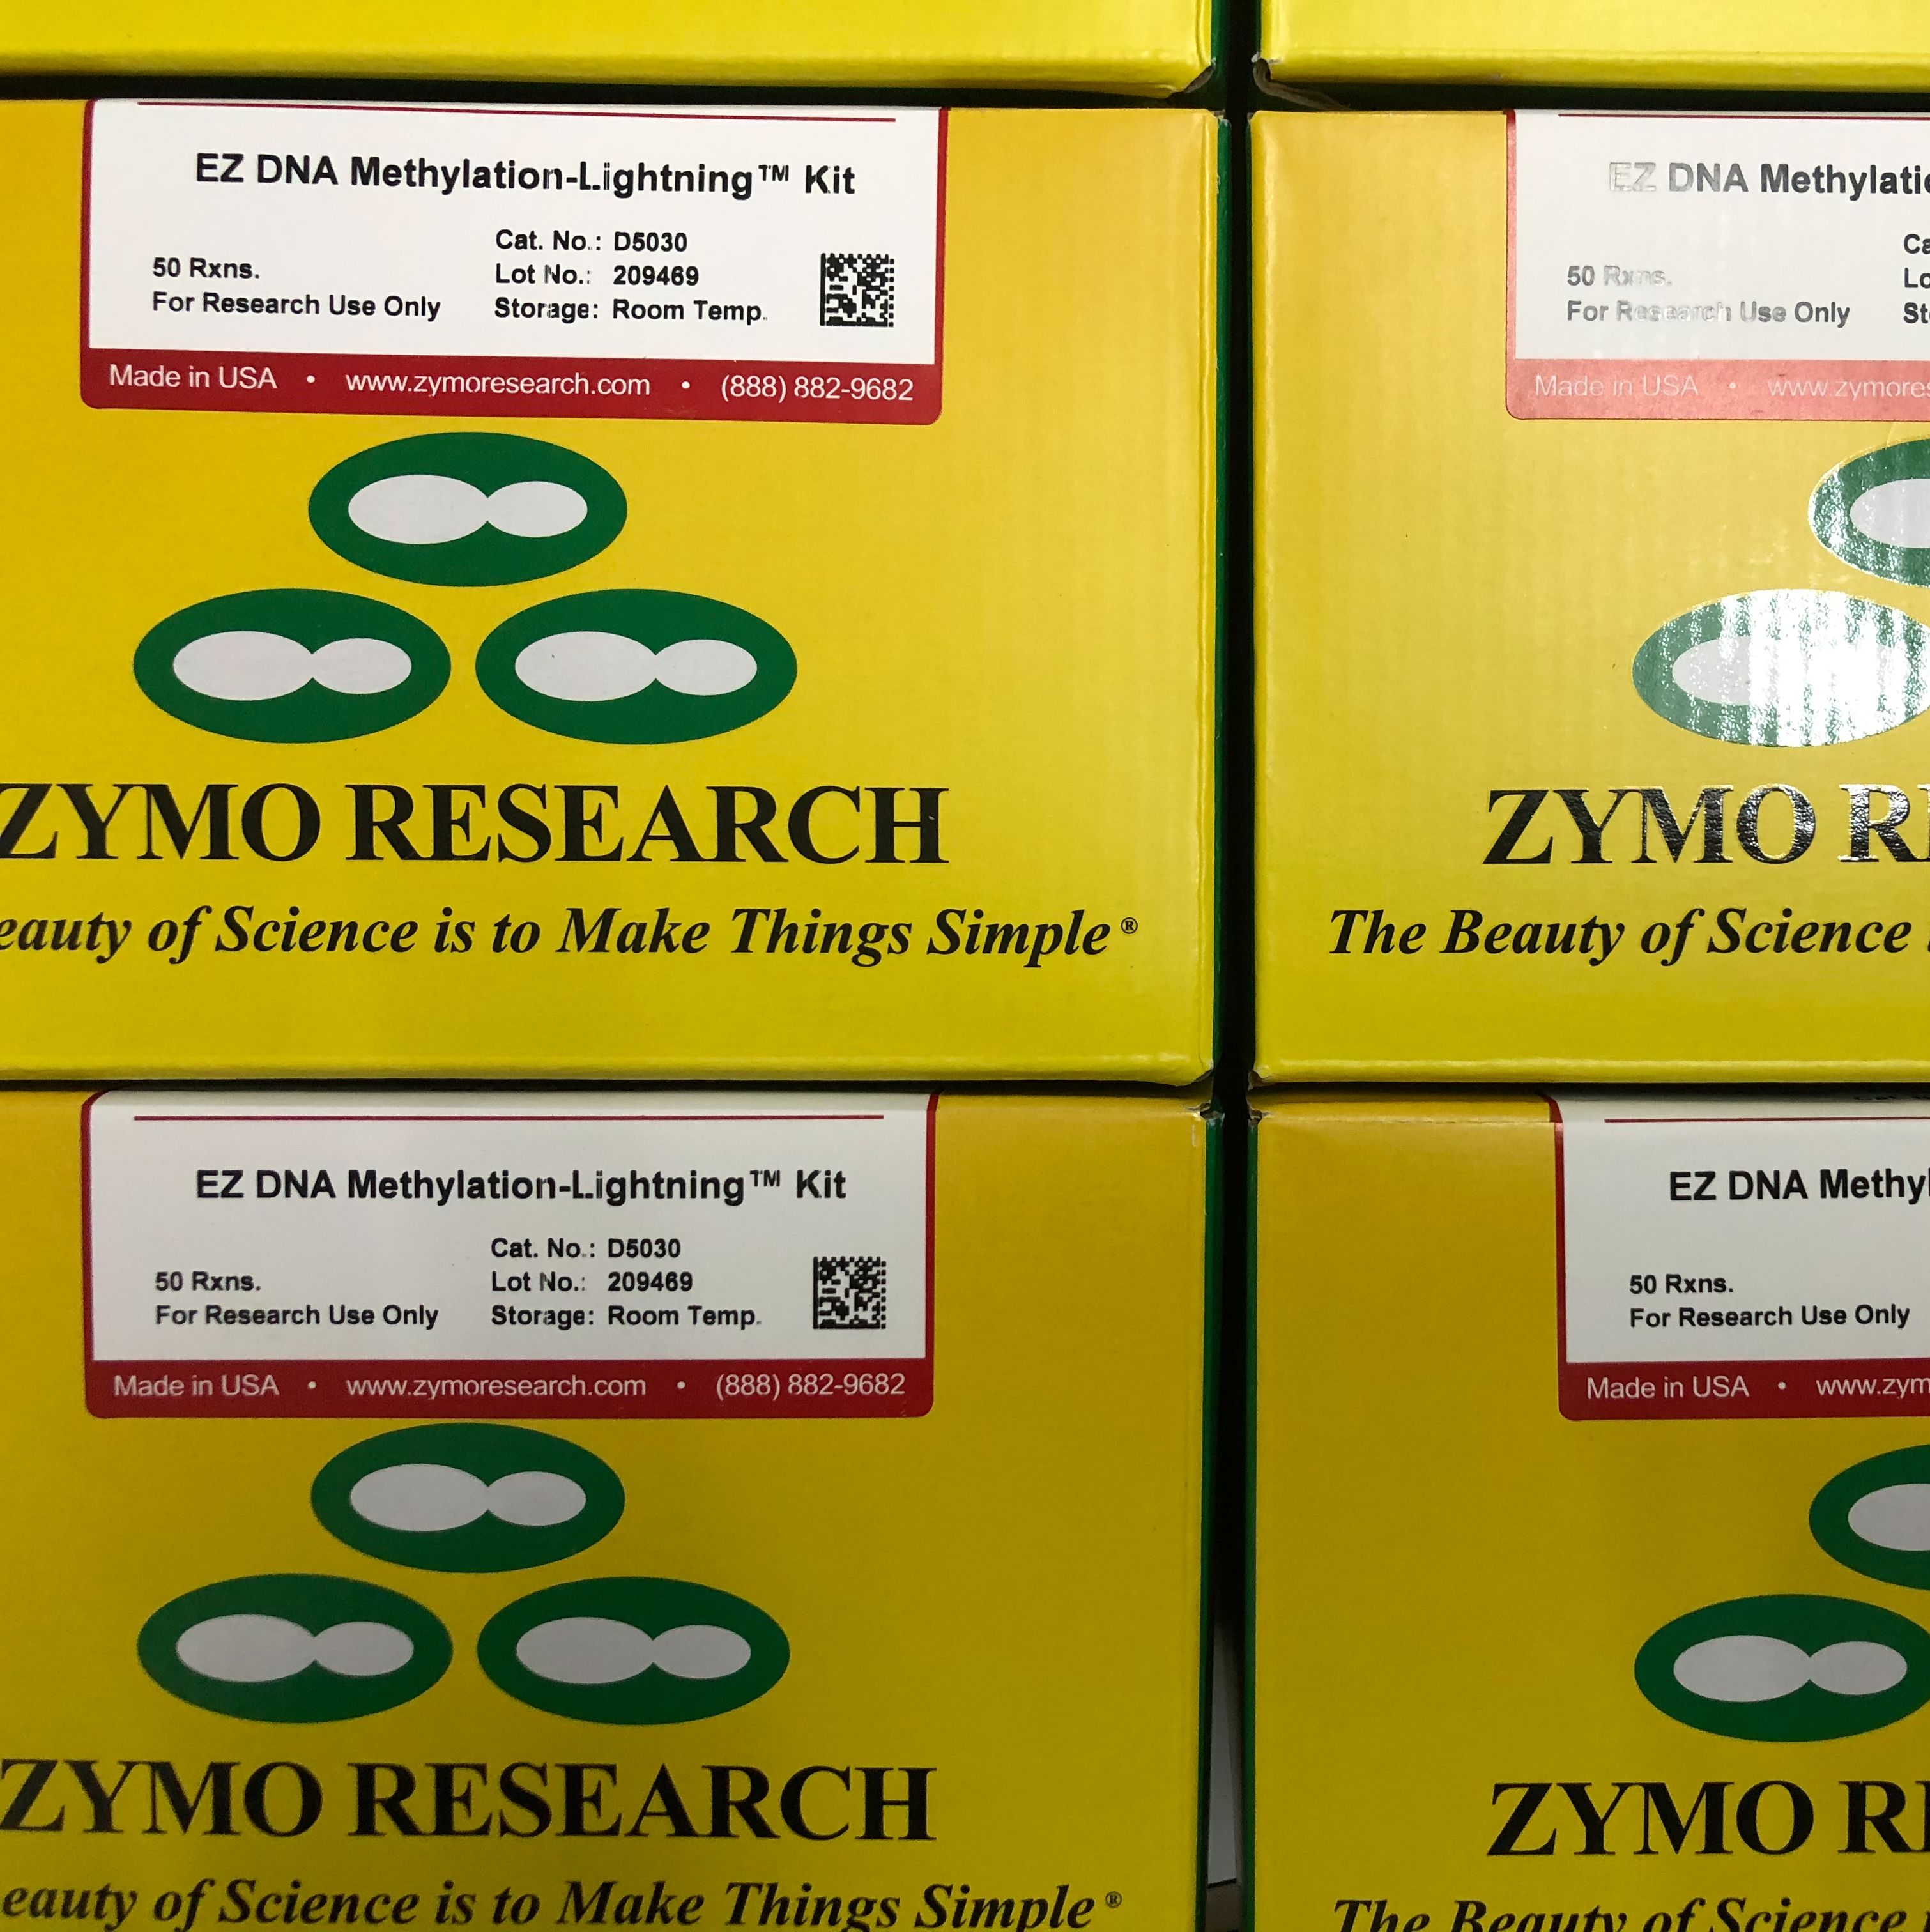 现货Zymo Research货号D5030上海睿安EZ DNA Methylation-Lightning Kit